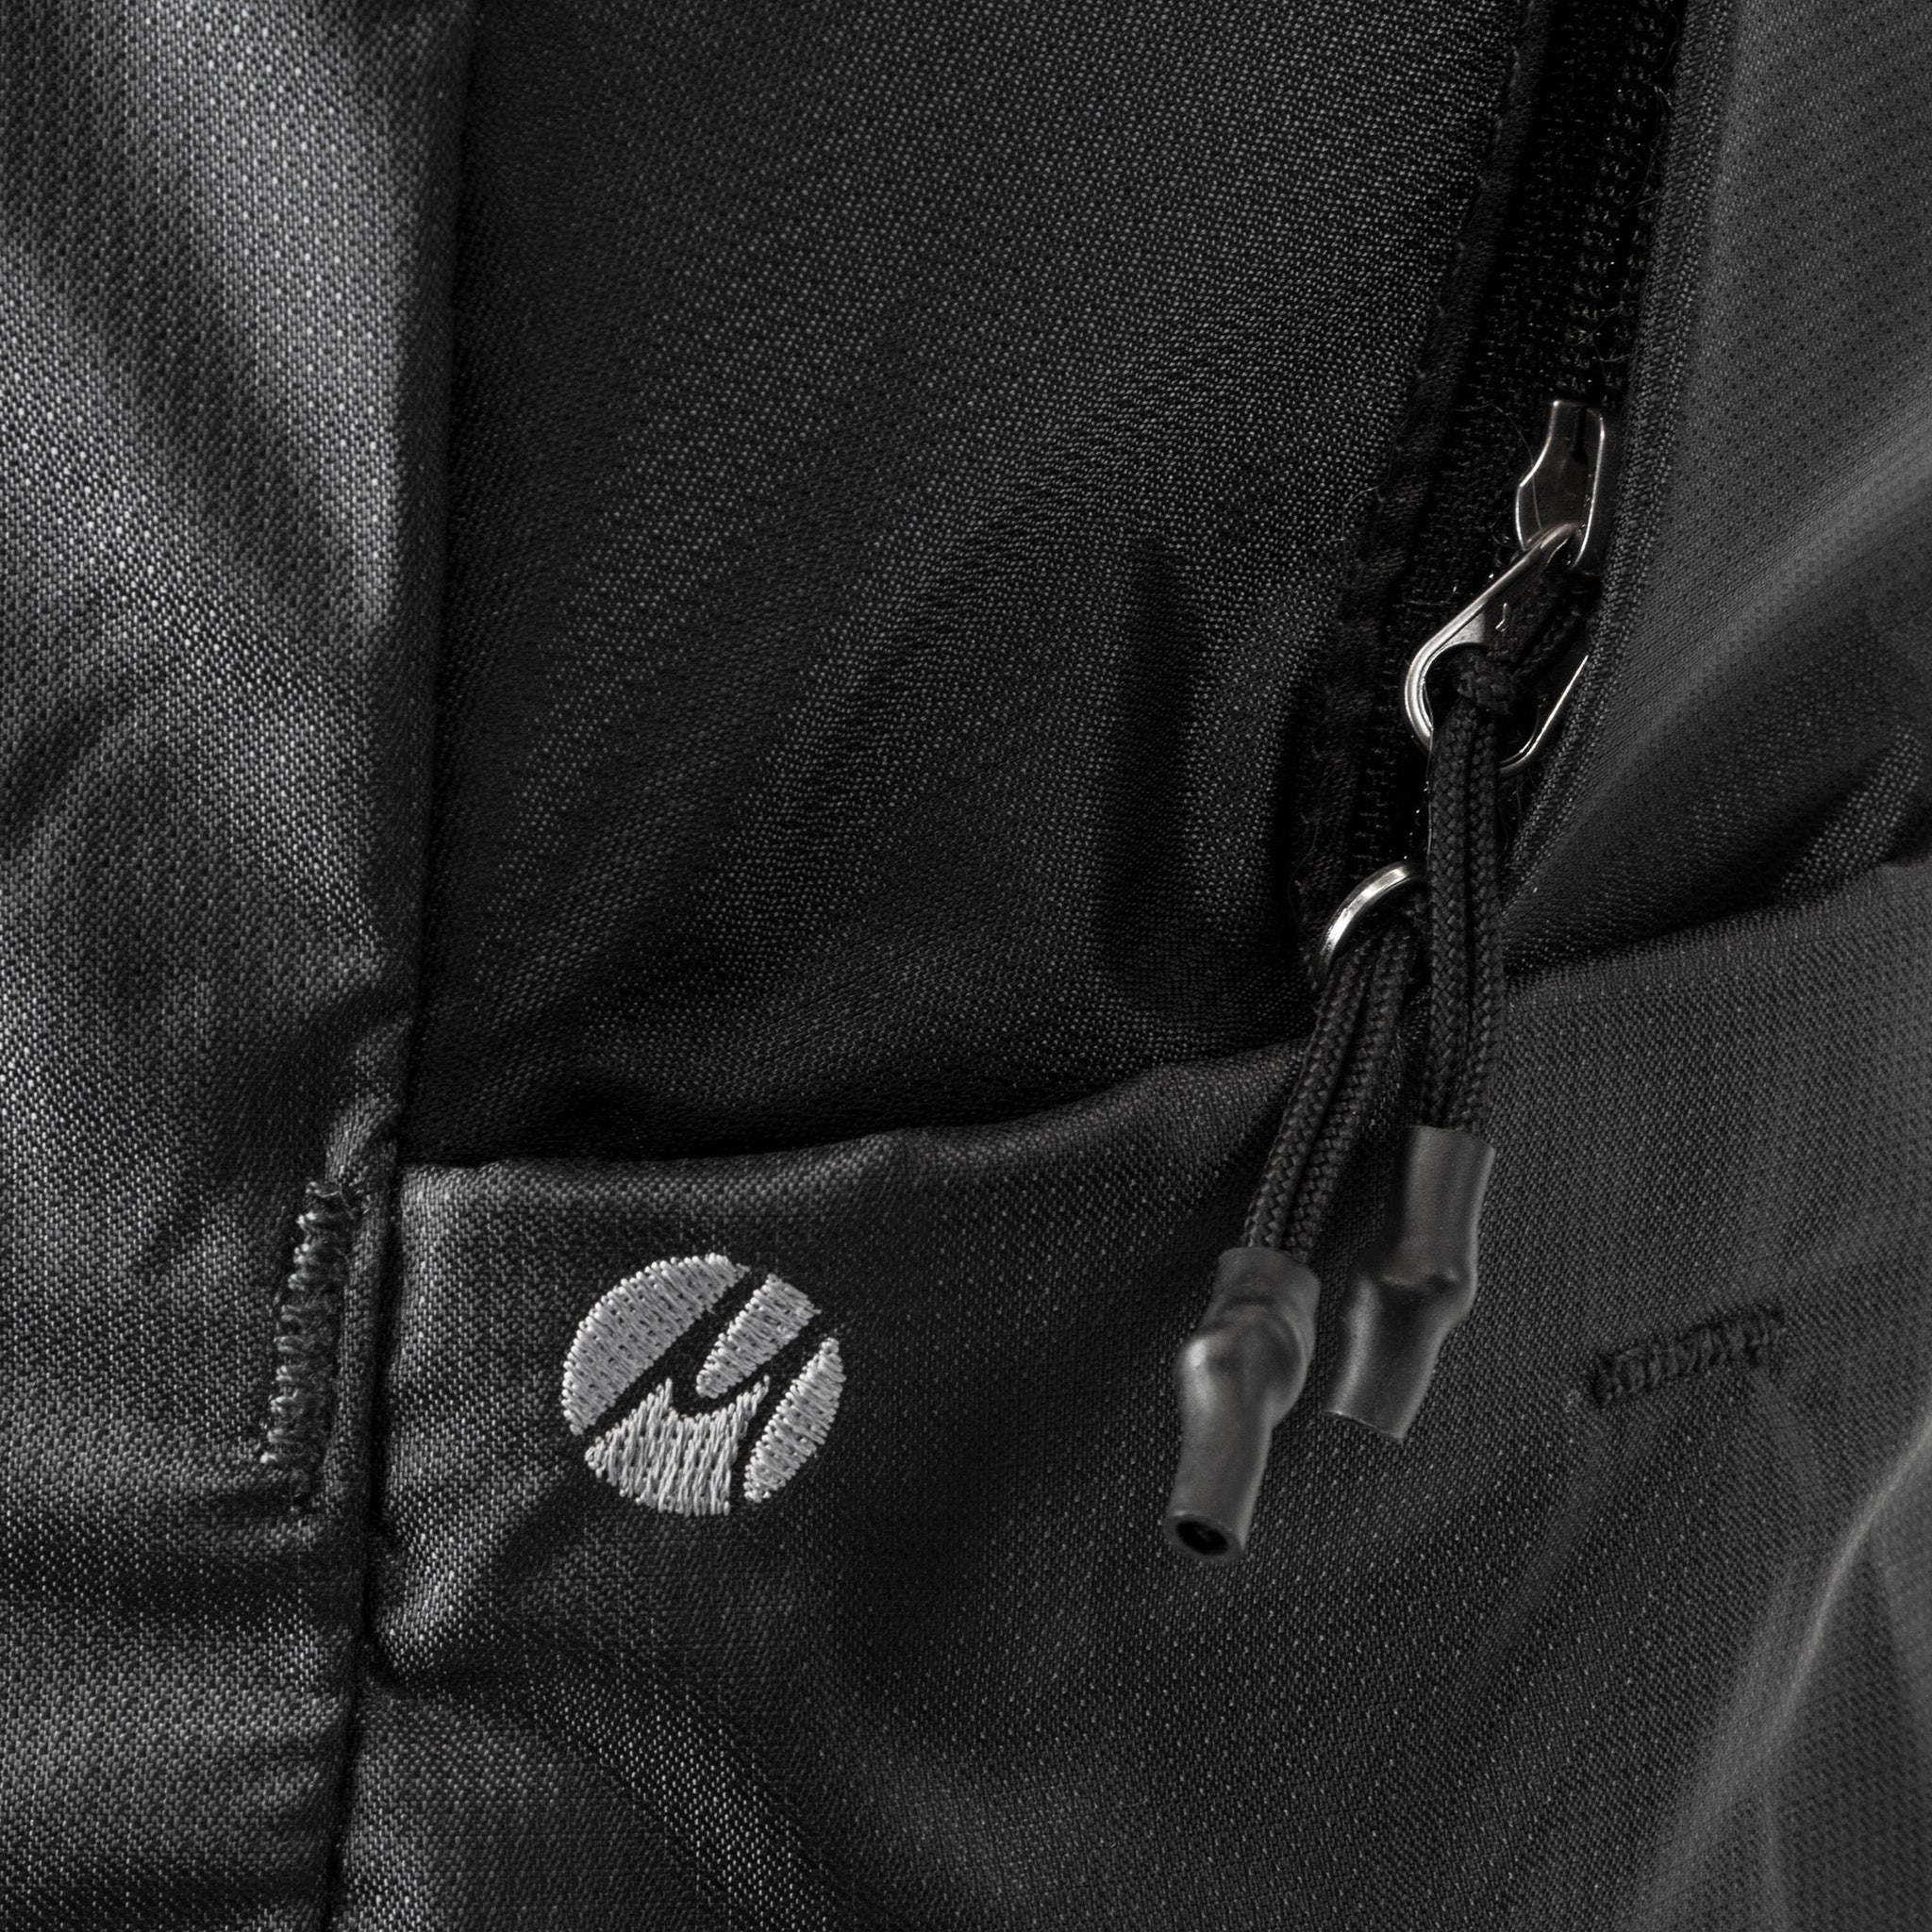 Matador On-Grid Packable Backpack